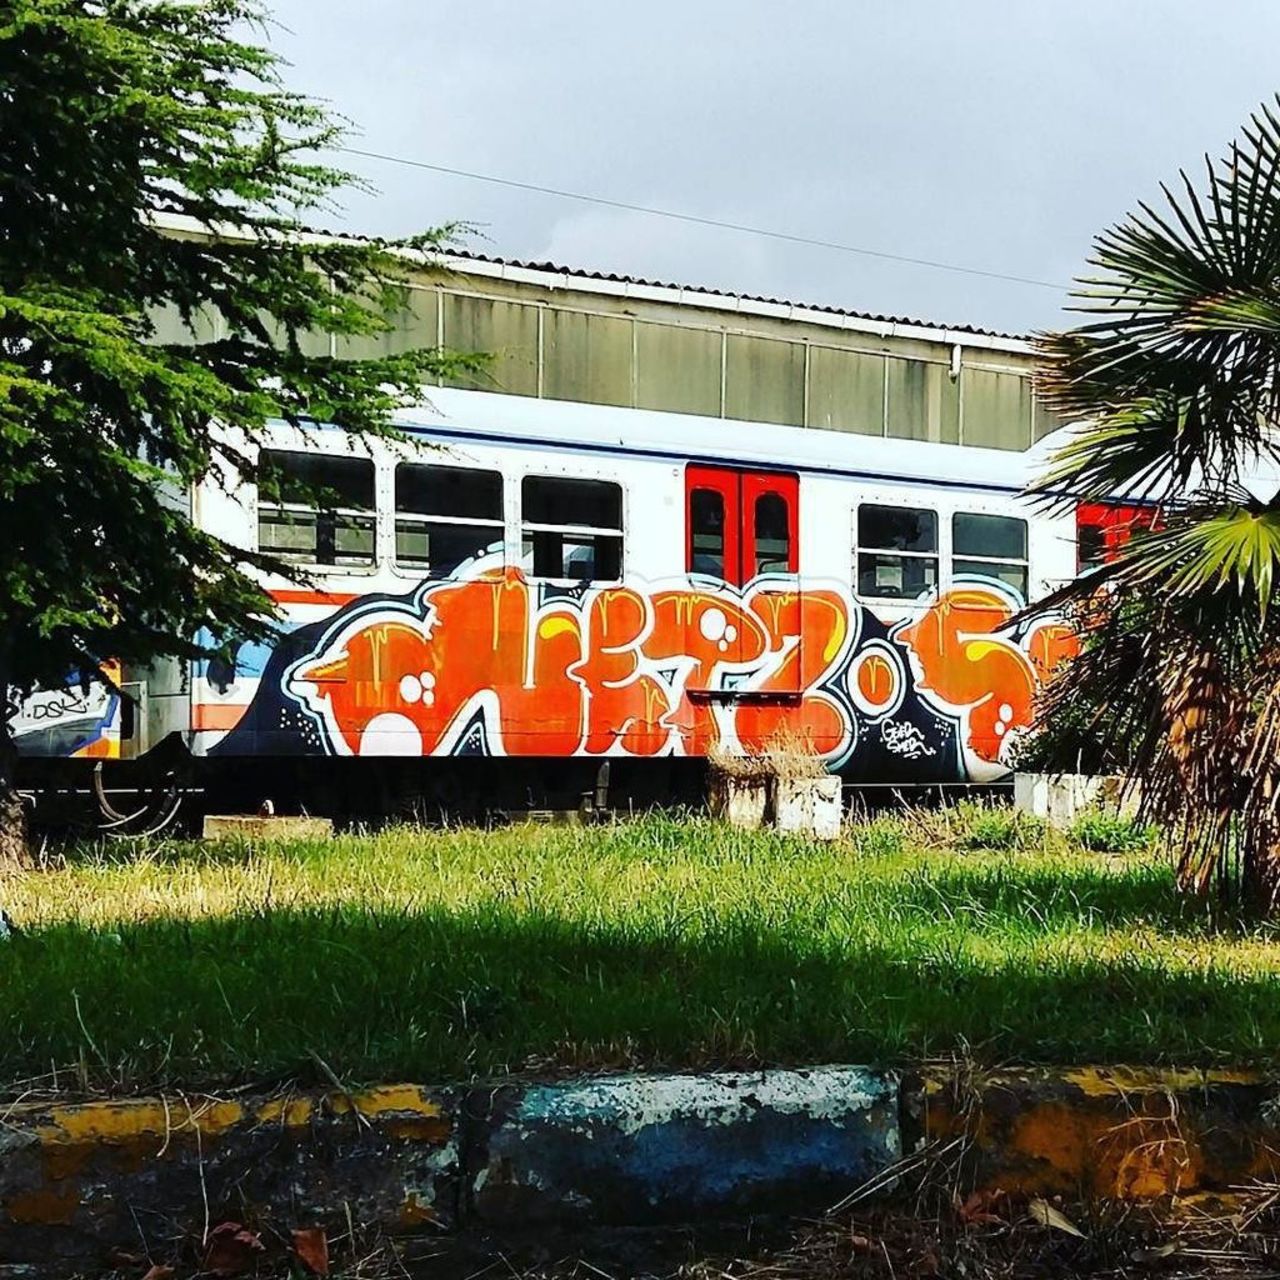 #train #dsb_graff @rsa_graffiti #ingf@streetawesome #streetart #urbanart #graffitiart #graffiti #instagraffiti #str… https://t.co/CF6O4SIgHc